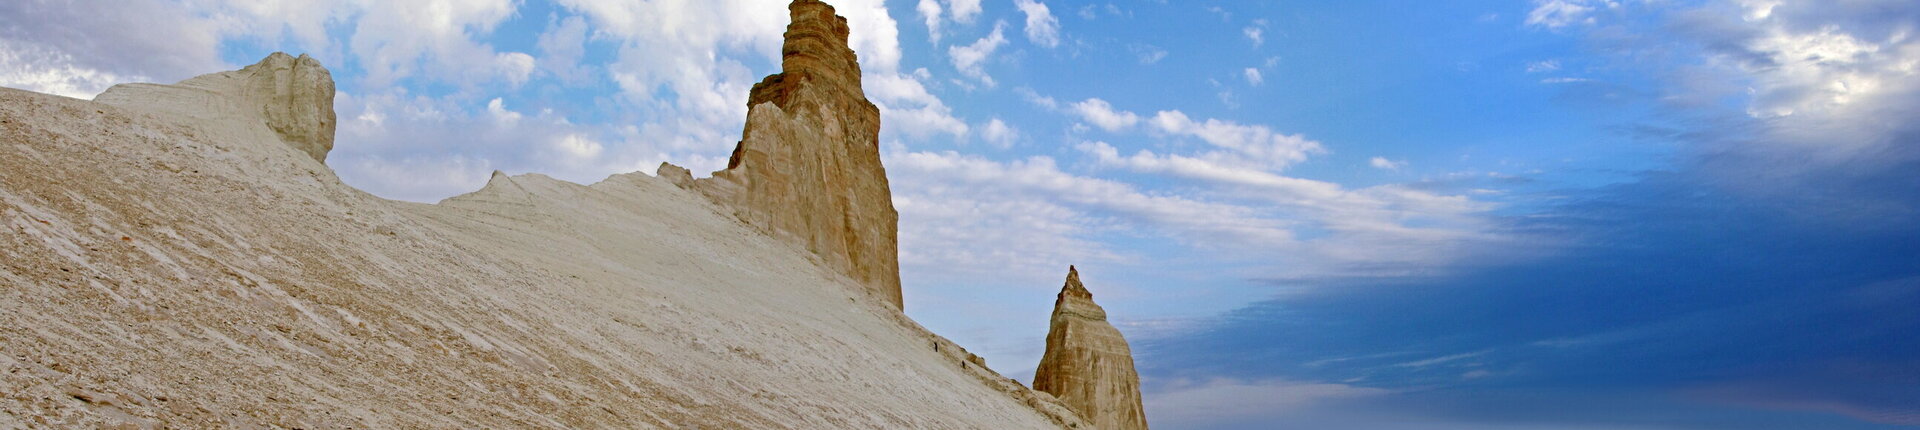 Ustyurt Plateaus: This plateau is located in Kazakhstan, Turkmenistan and Uzbekistan. Photo: M. Pestov